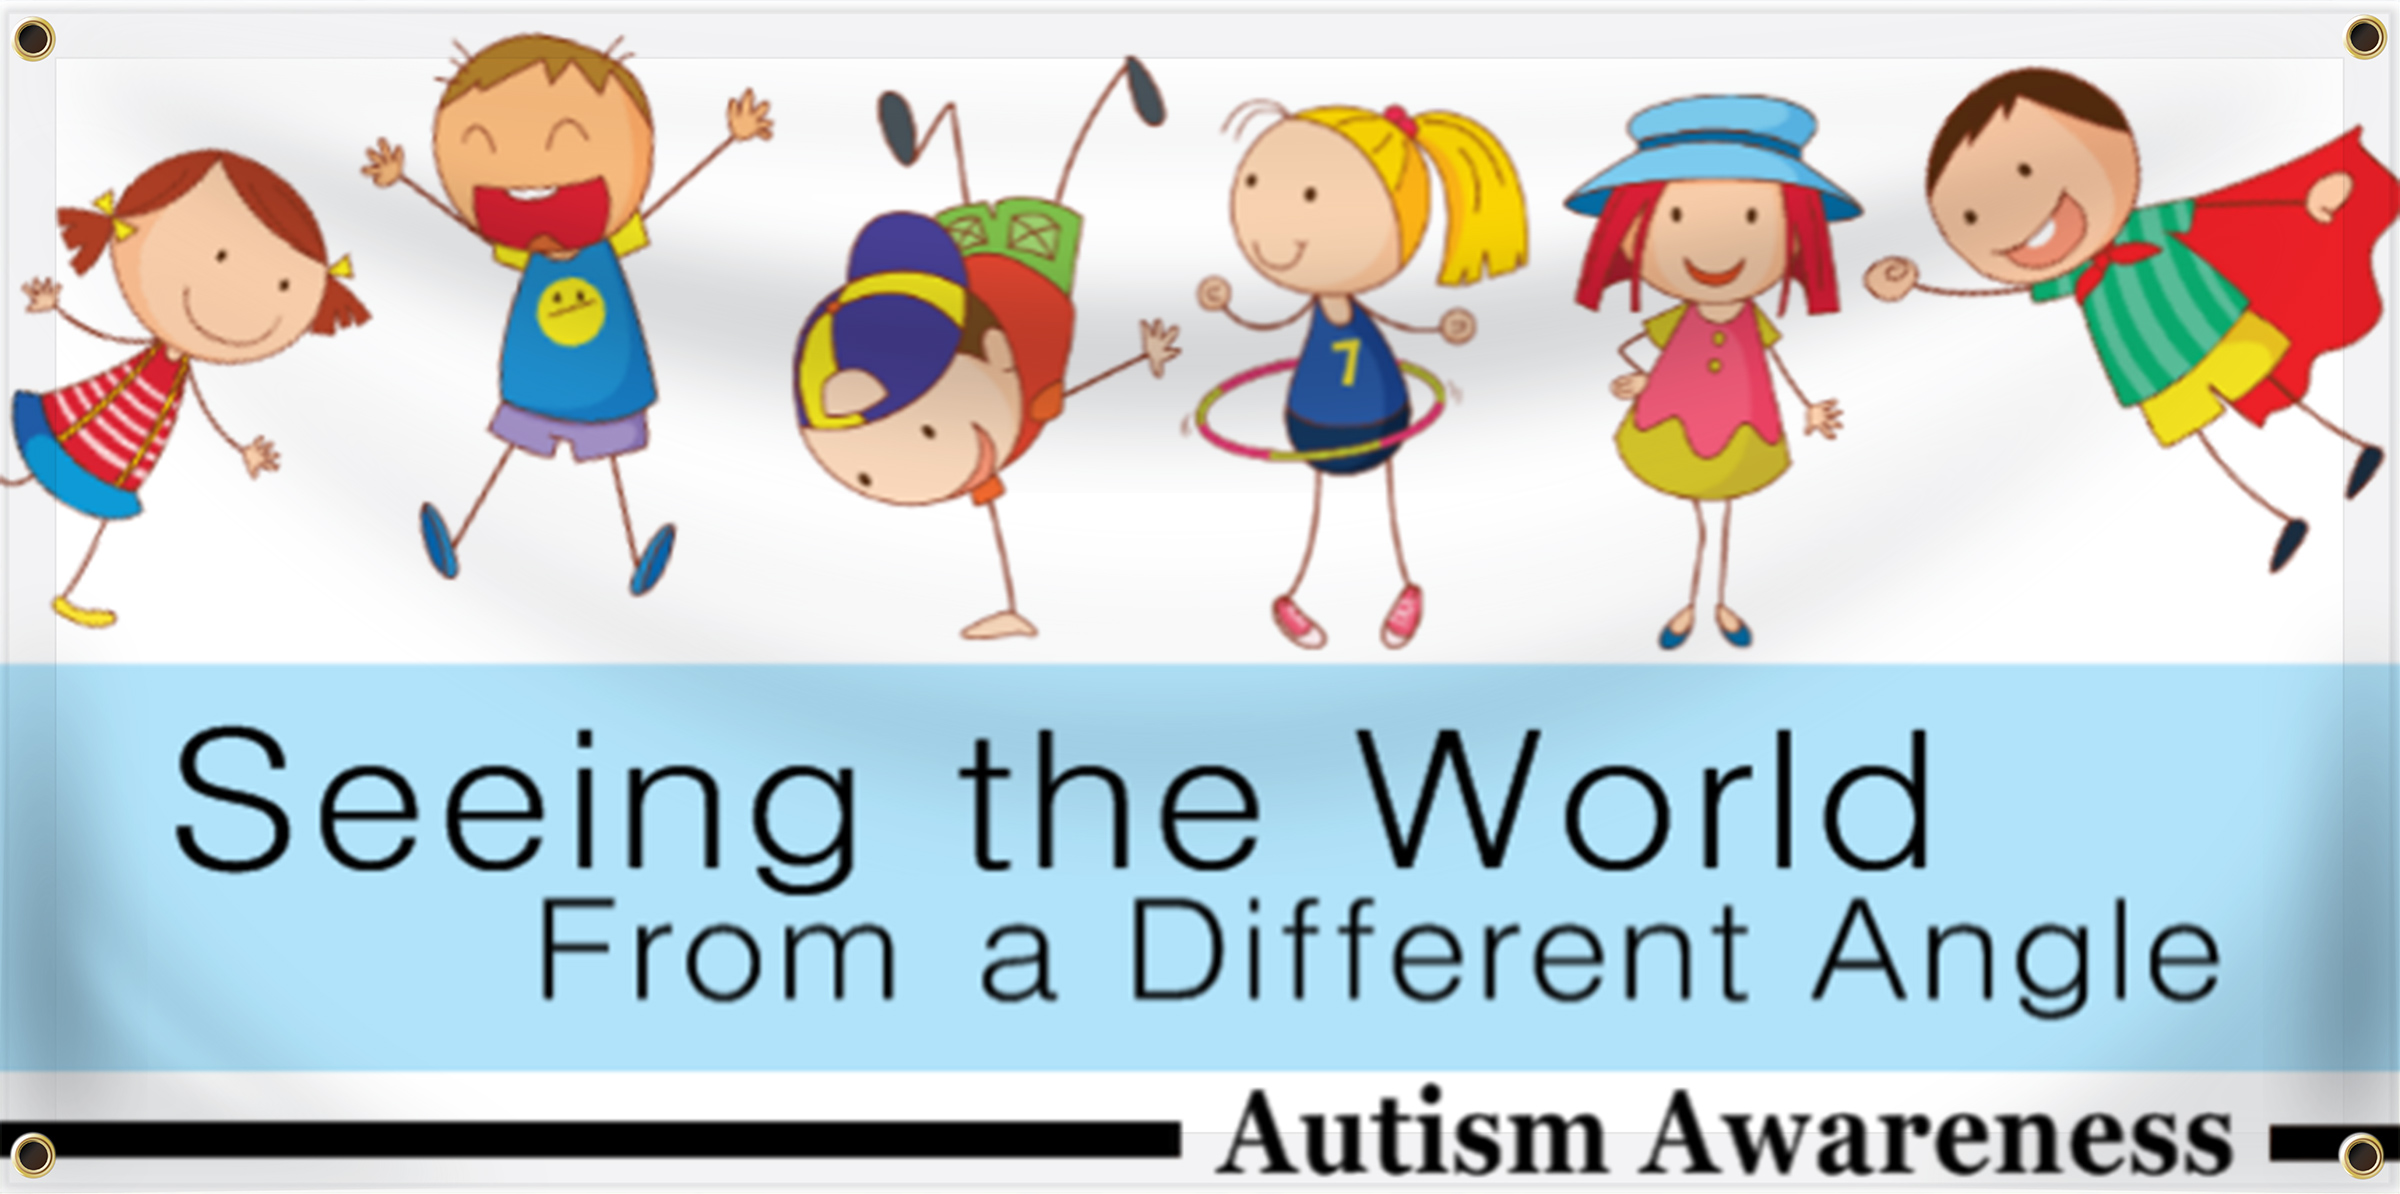 Autism Awareness Banner Idea | LawnSigns.com